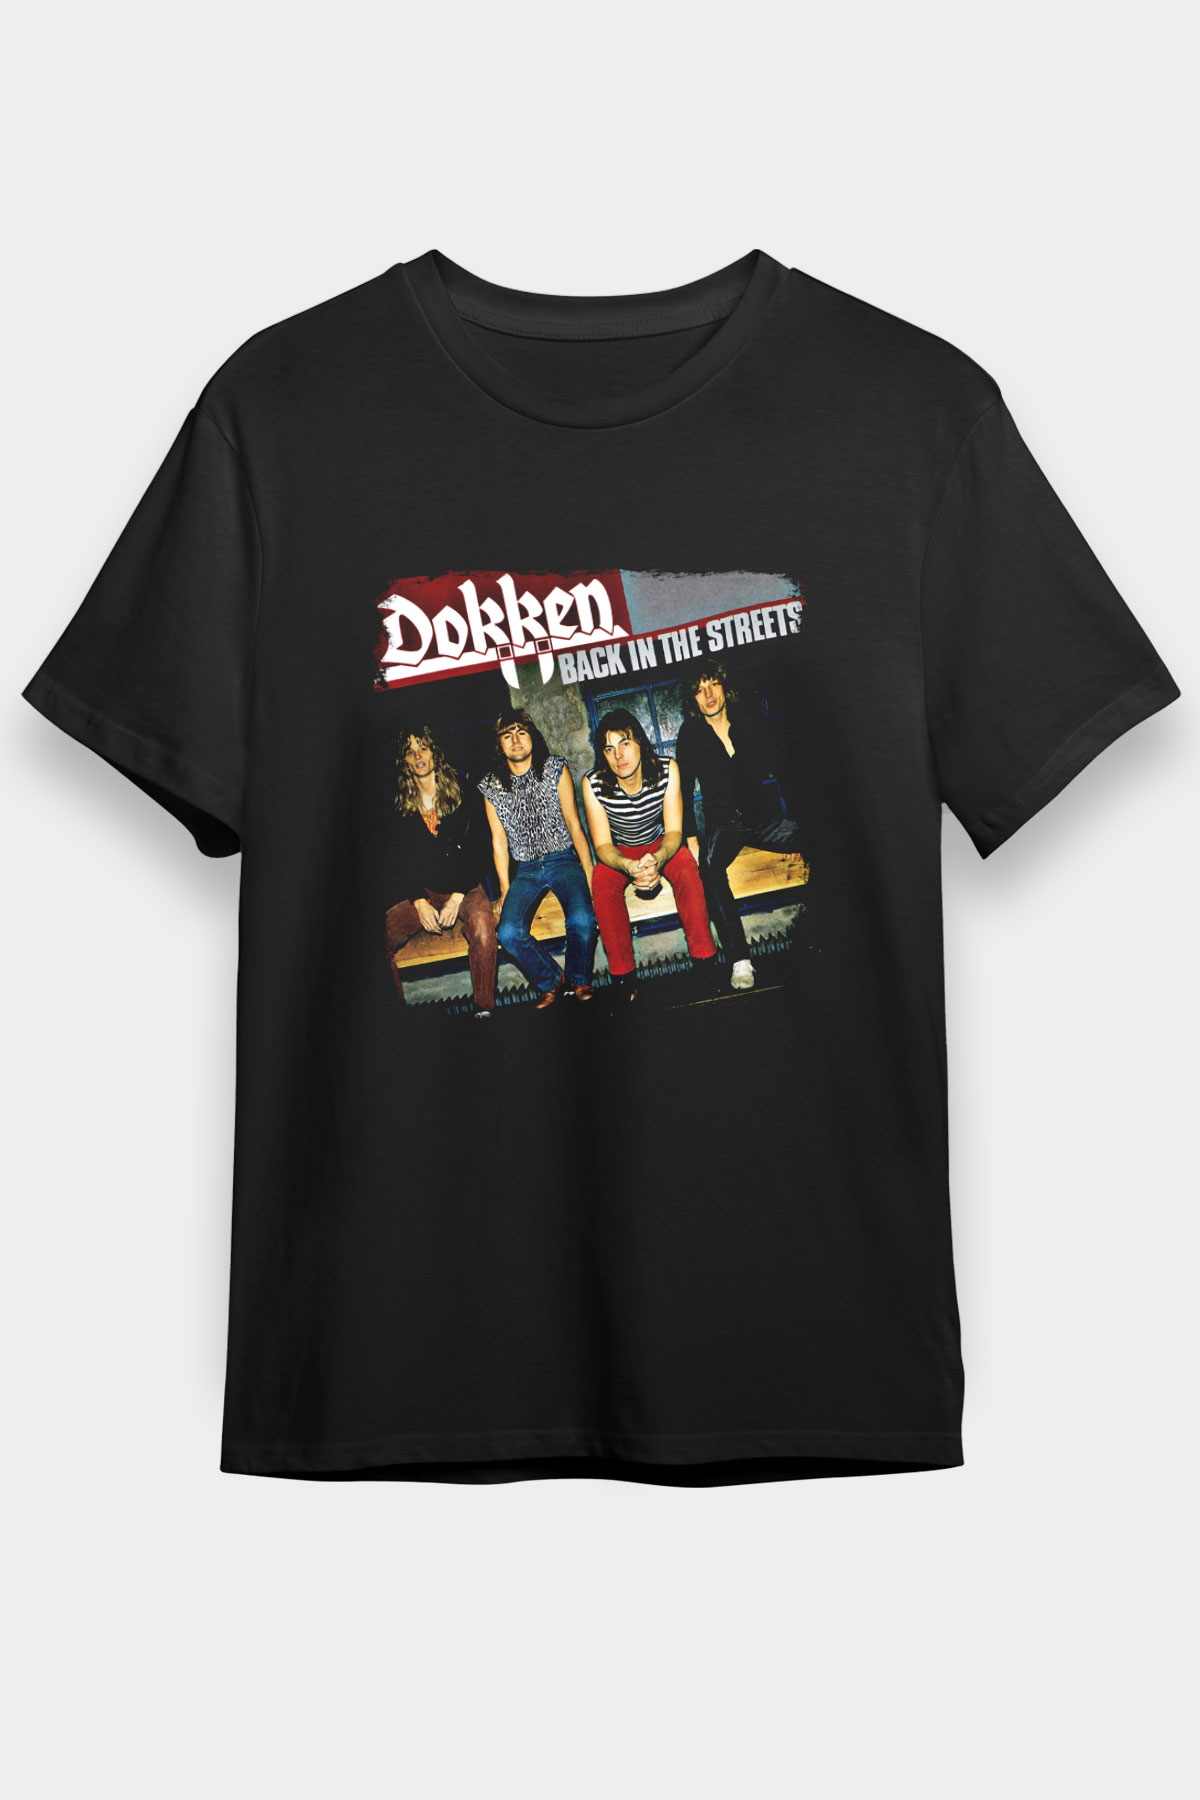 Dokken  T shirt,Music Band,Unisex Tshirt 13